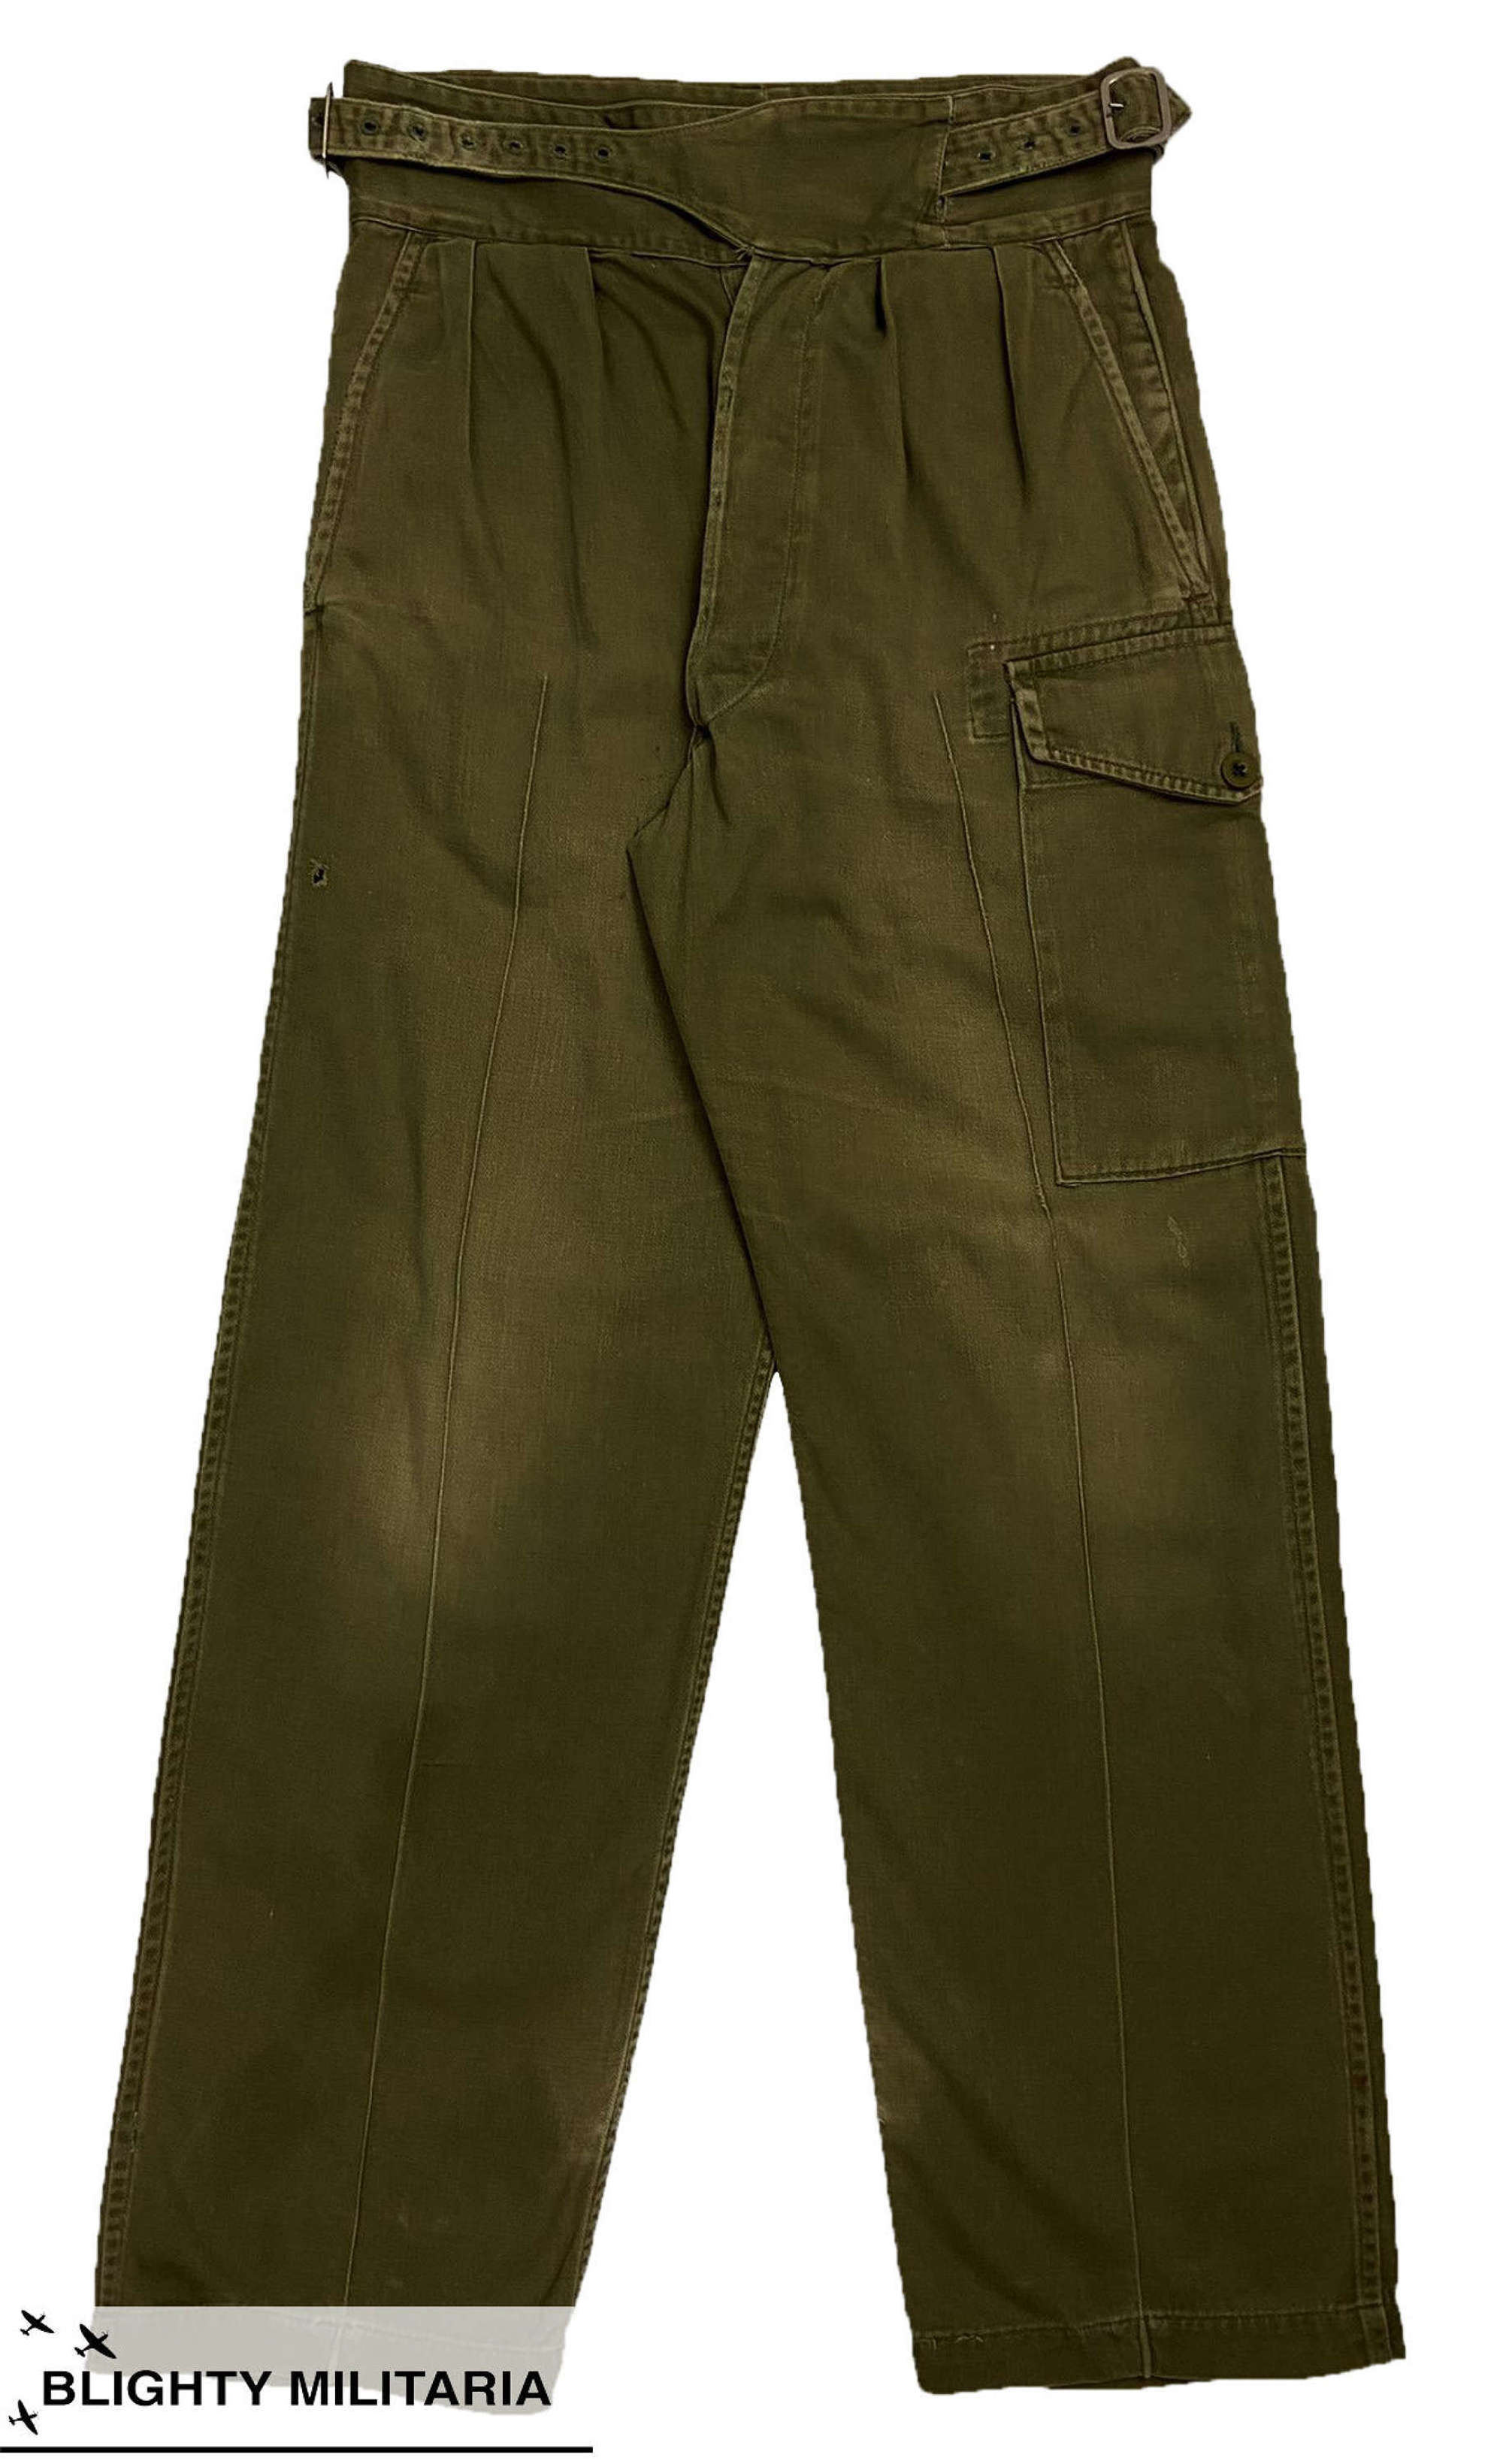 Original 1970s British Army 1950 Pattern Jungle Green Trousers